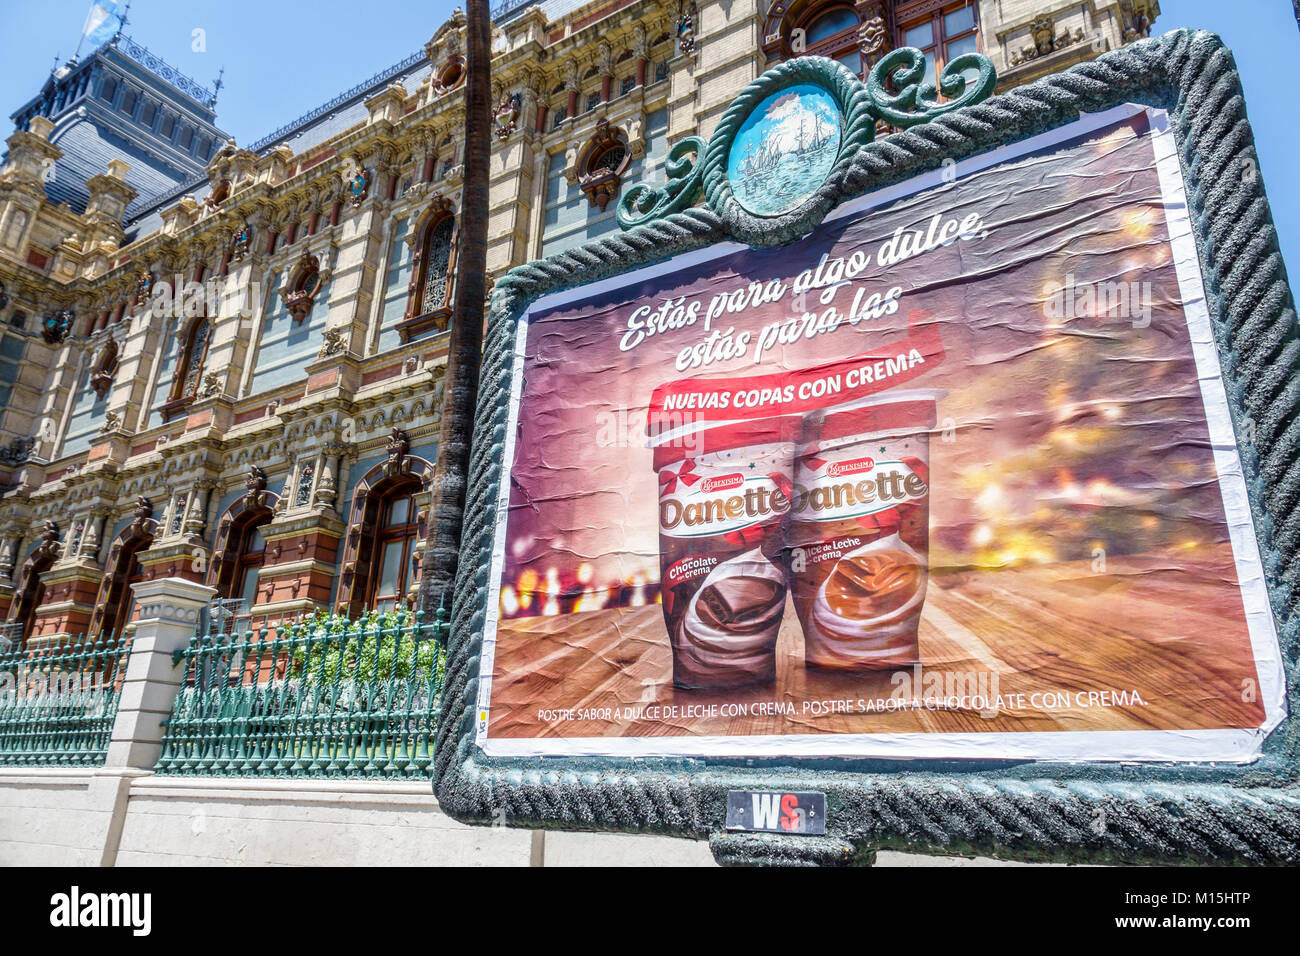 Buenos Aires Argentina,Avenida Cordoba,sidewalk billboard,ad advertising advertisement,Danette,pudding,Argentinean Argentinian Argentine South America Stock Photo